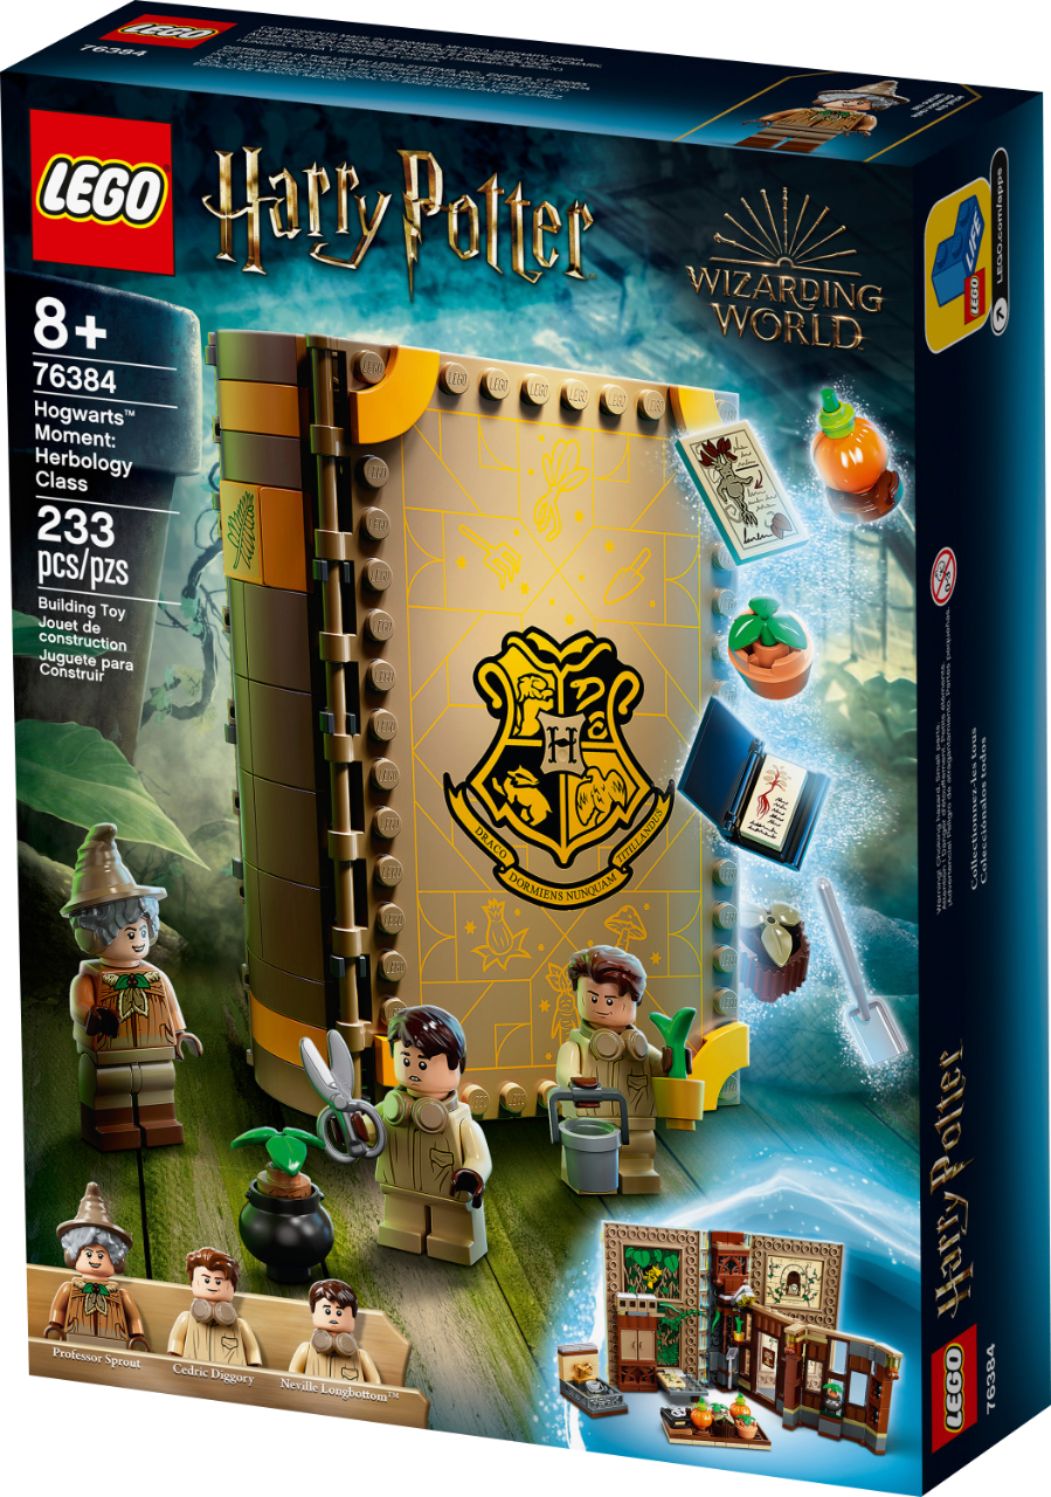 Lego 76384 Harry Potter Hogwarts Moment Herbology Class